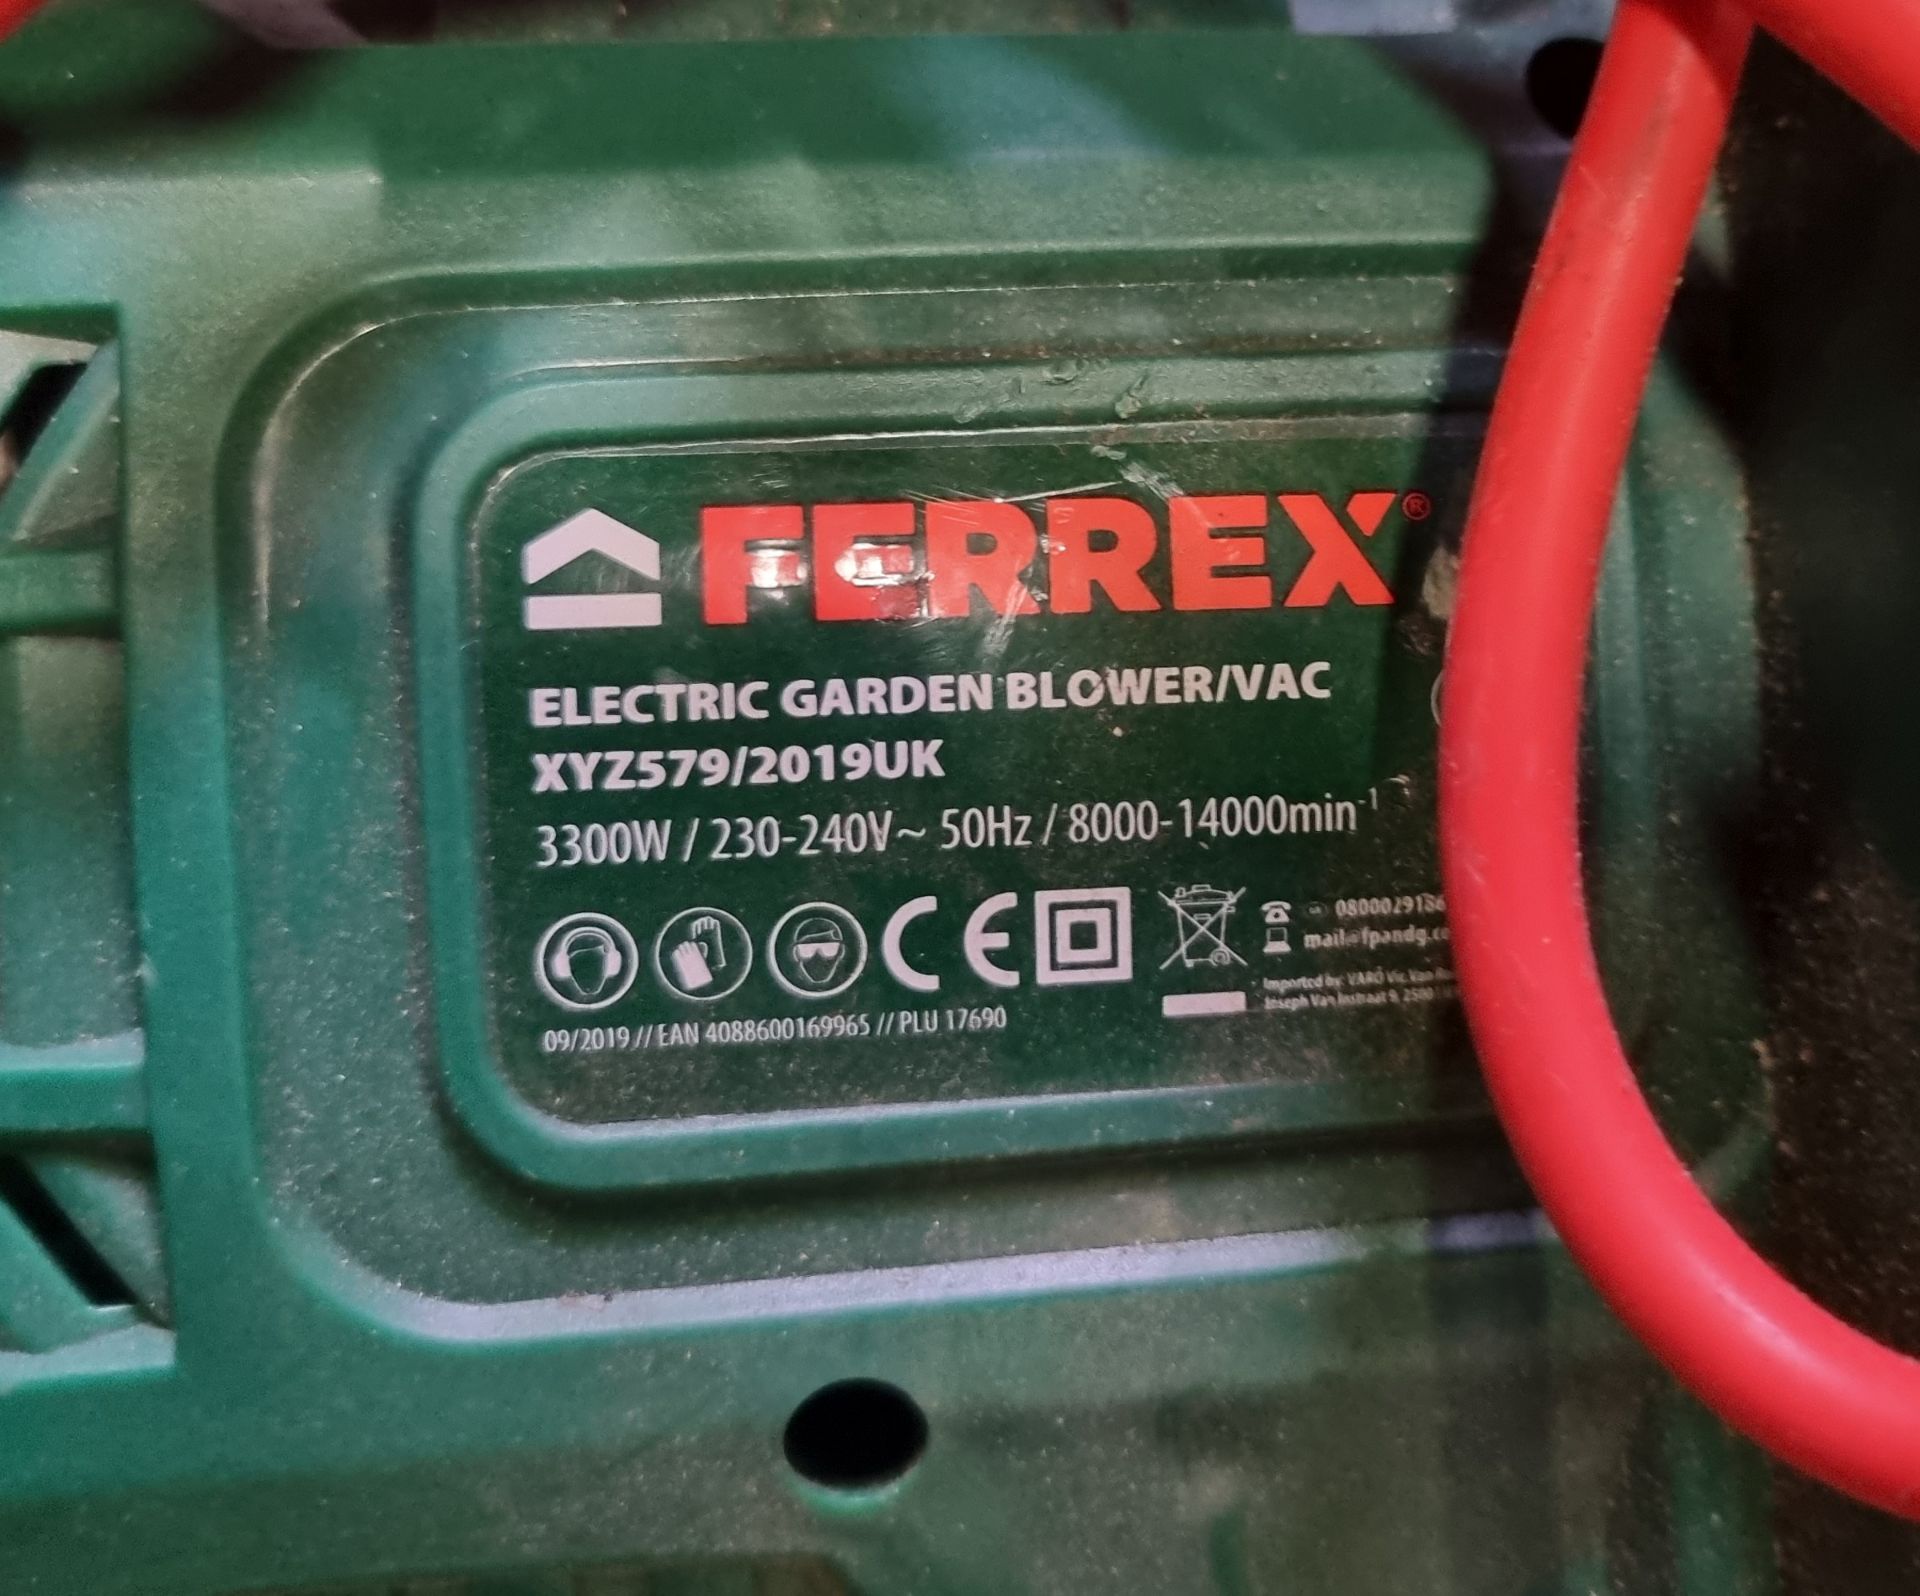 Ferrex XYZ579 electric garden blower / vac 230v - Image 5 of 6